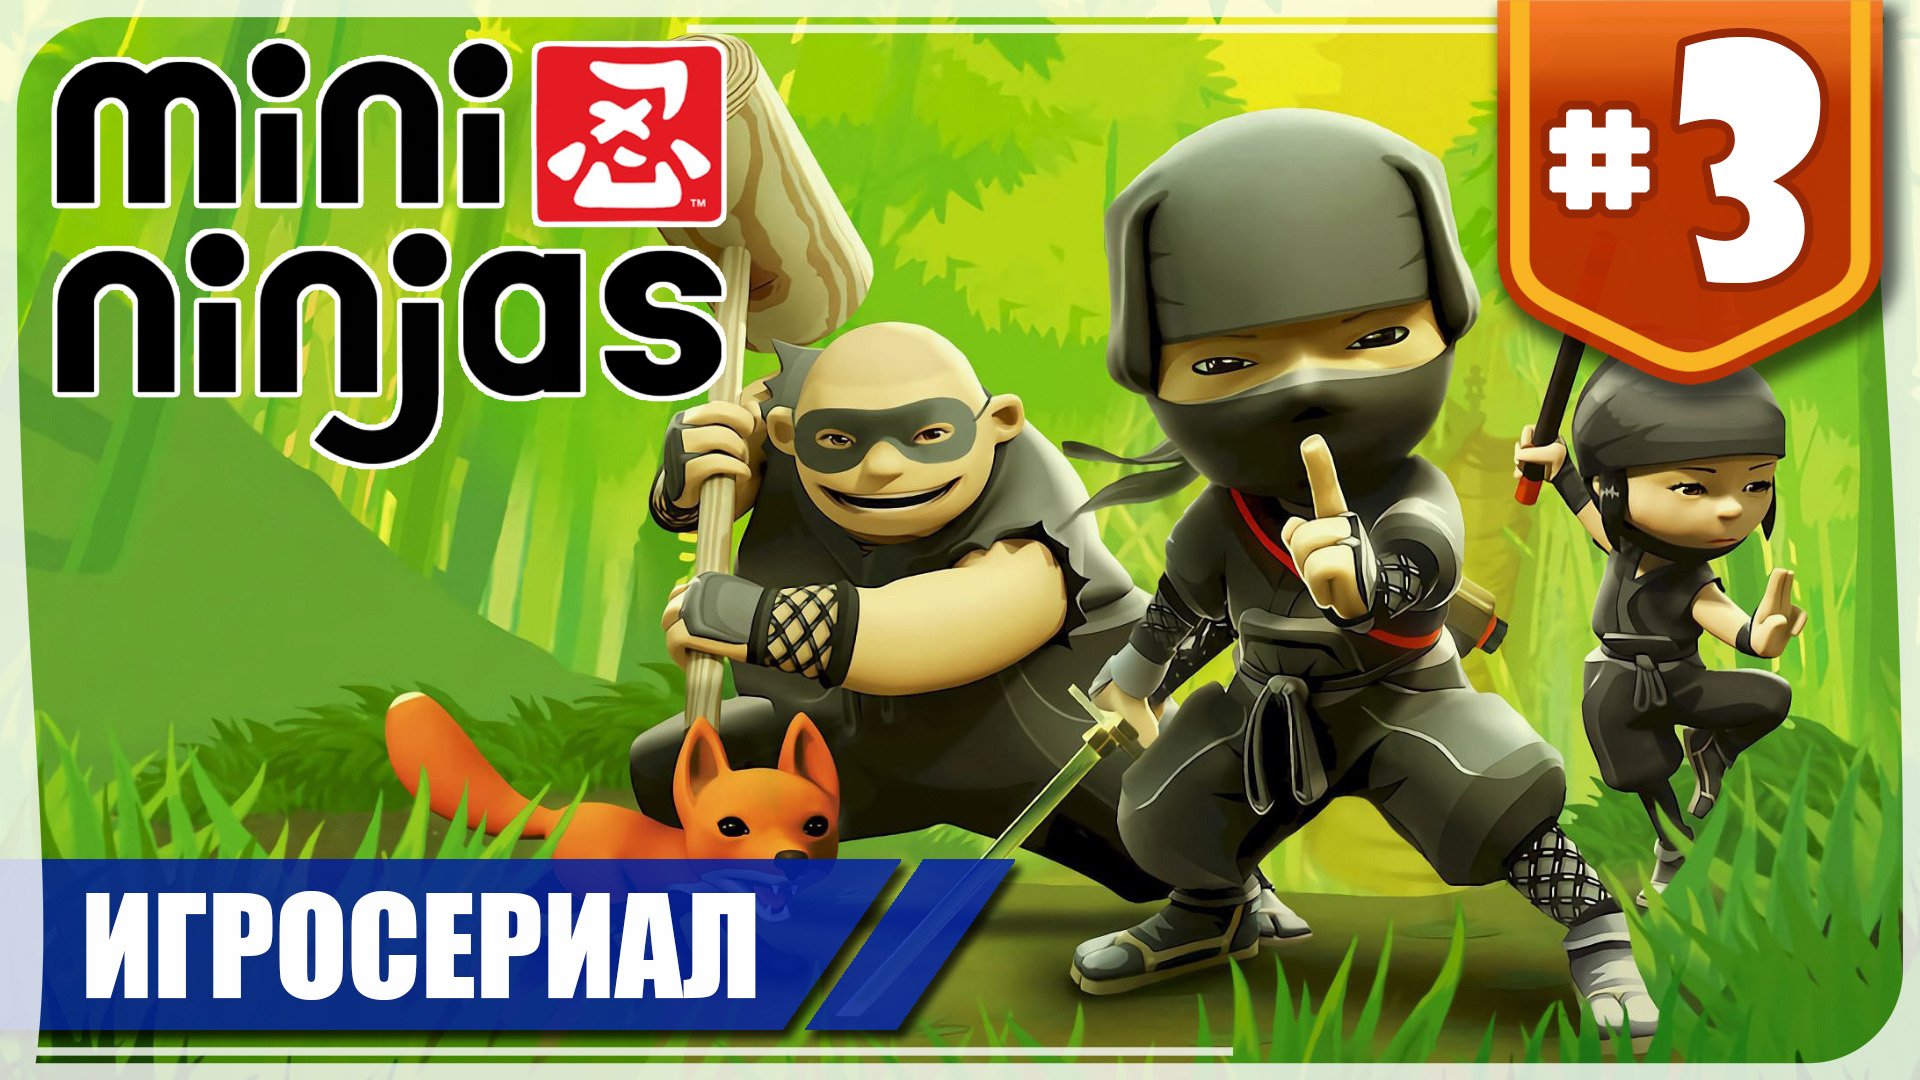 Mini Ninjas #3 ❖ Игросериал